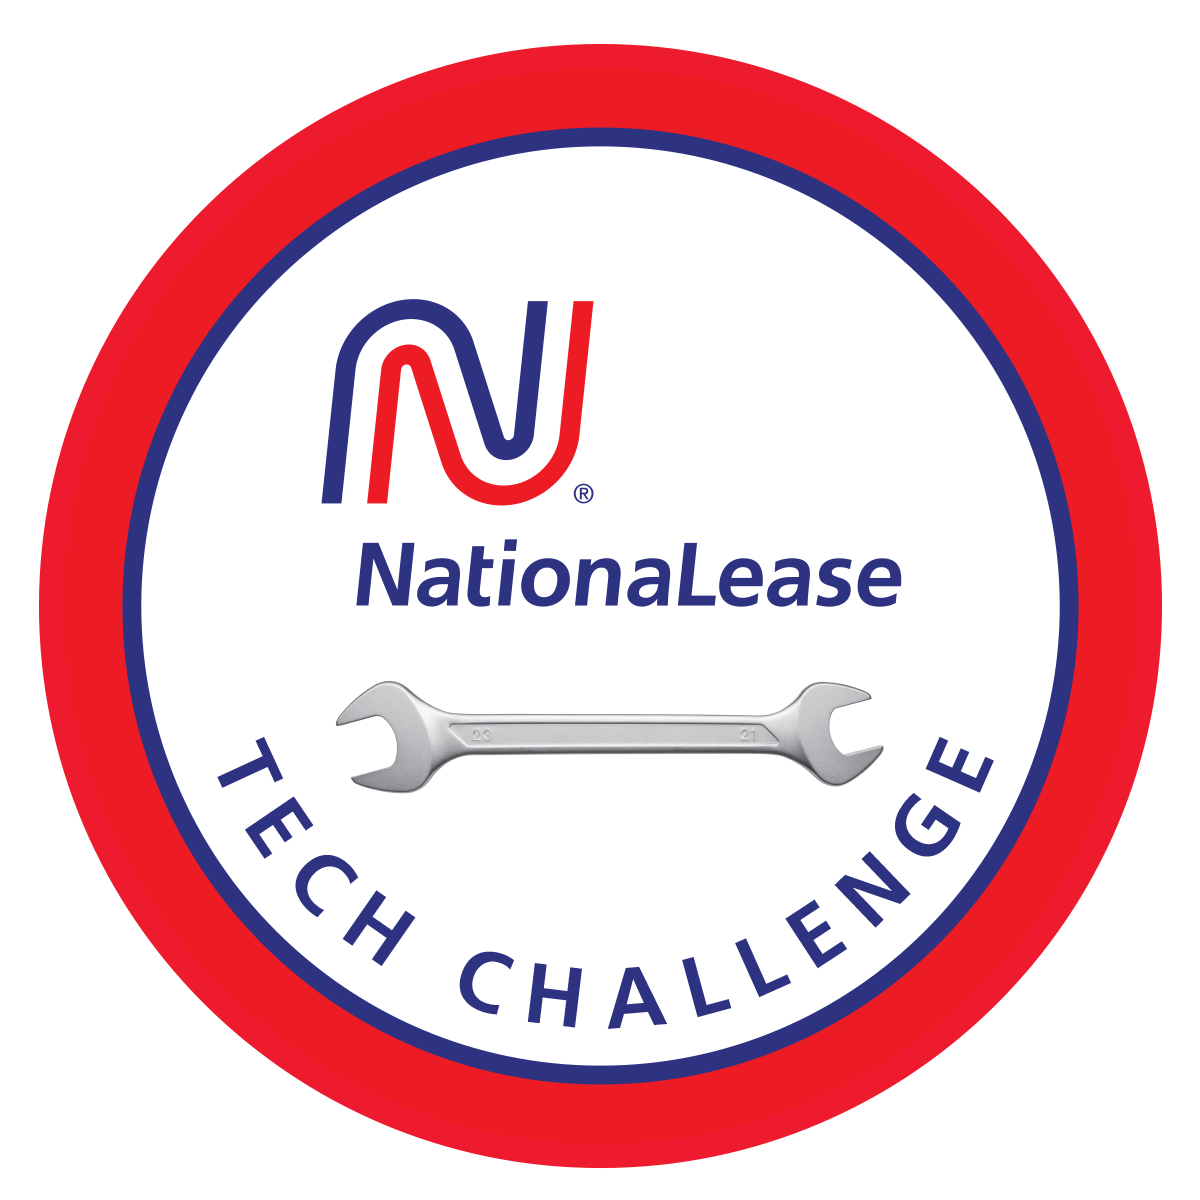 NationaLease Tech Challenge logo.